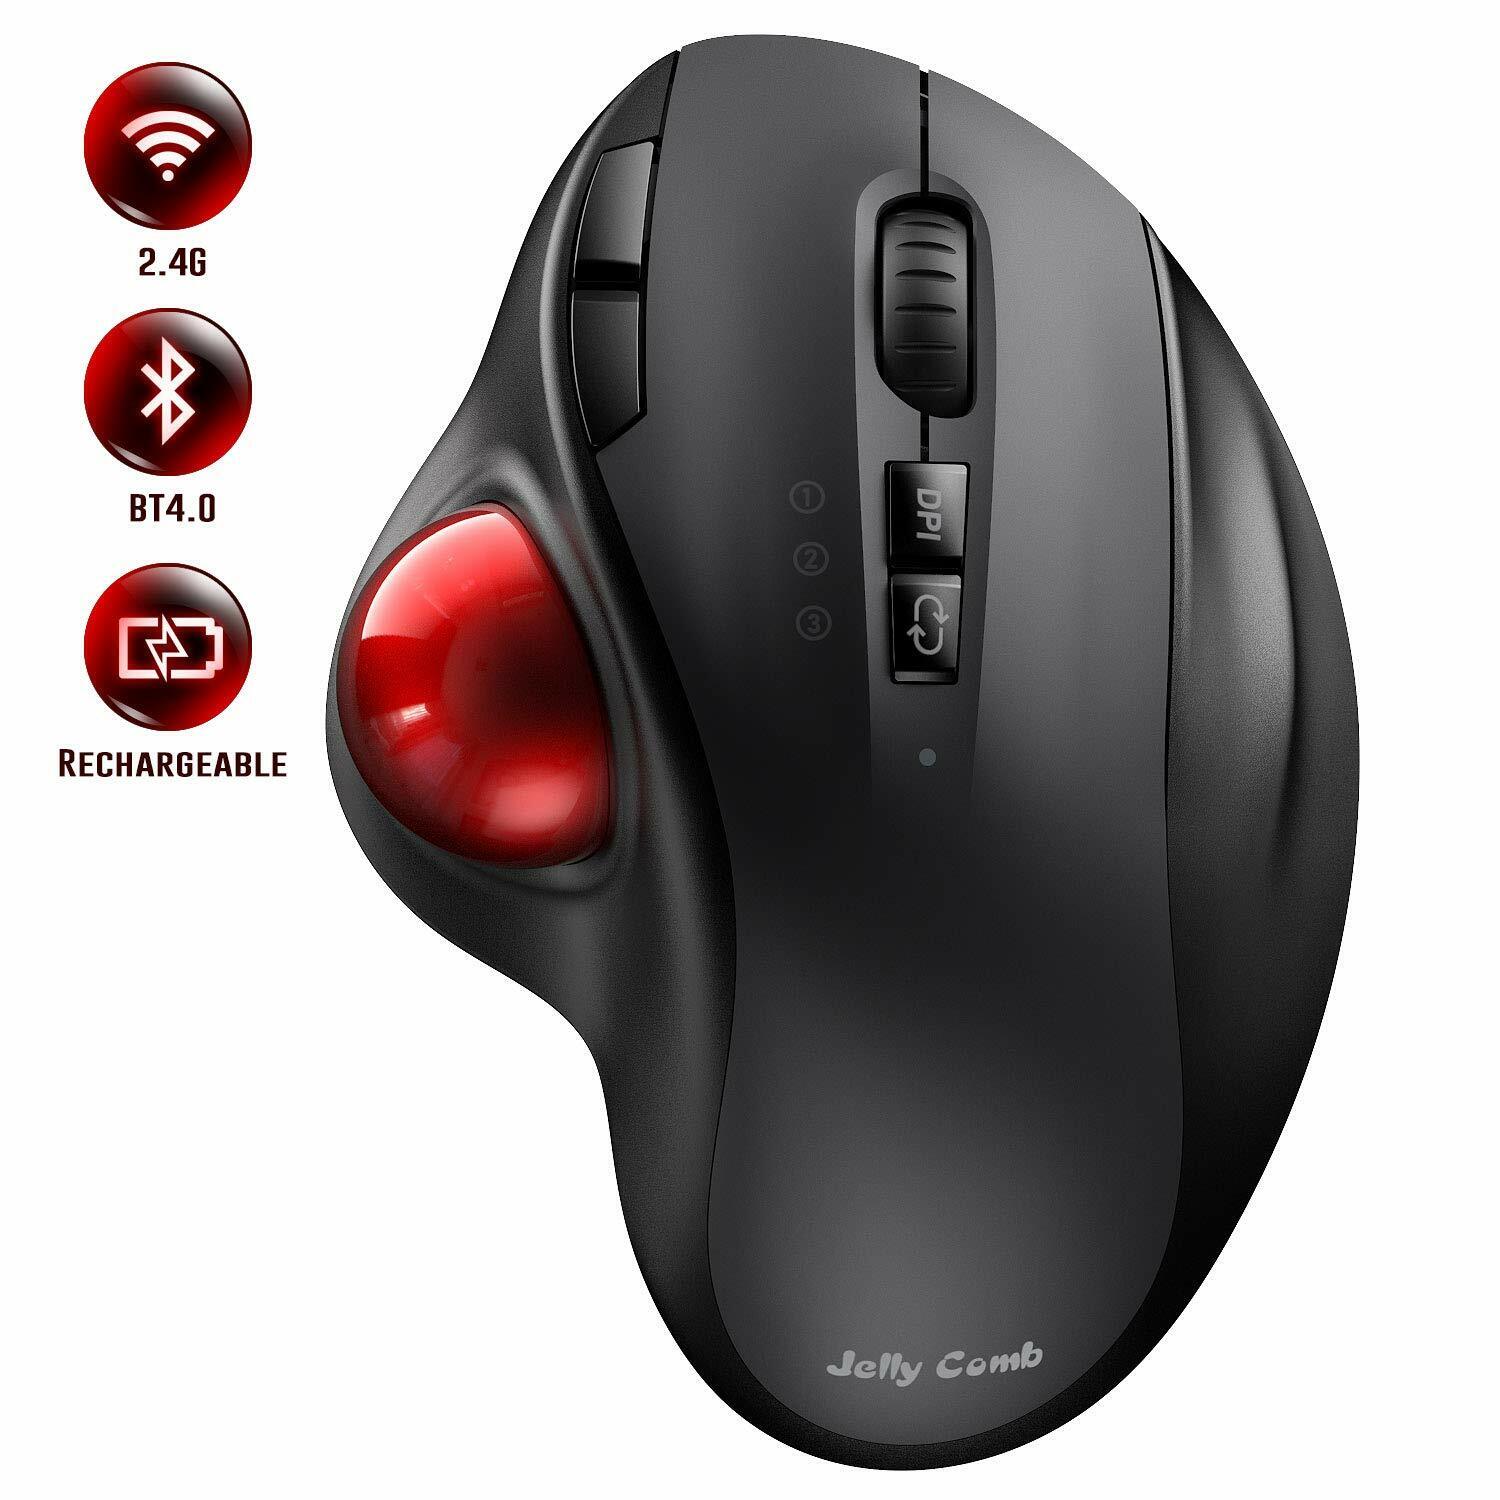 Bluetooth Trackball Mouse Jelly Comb 2.4G USB Ergonomic Mice Up to 2400 DPI